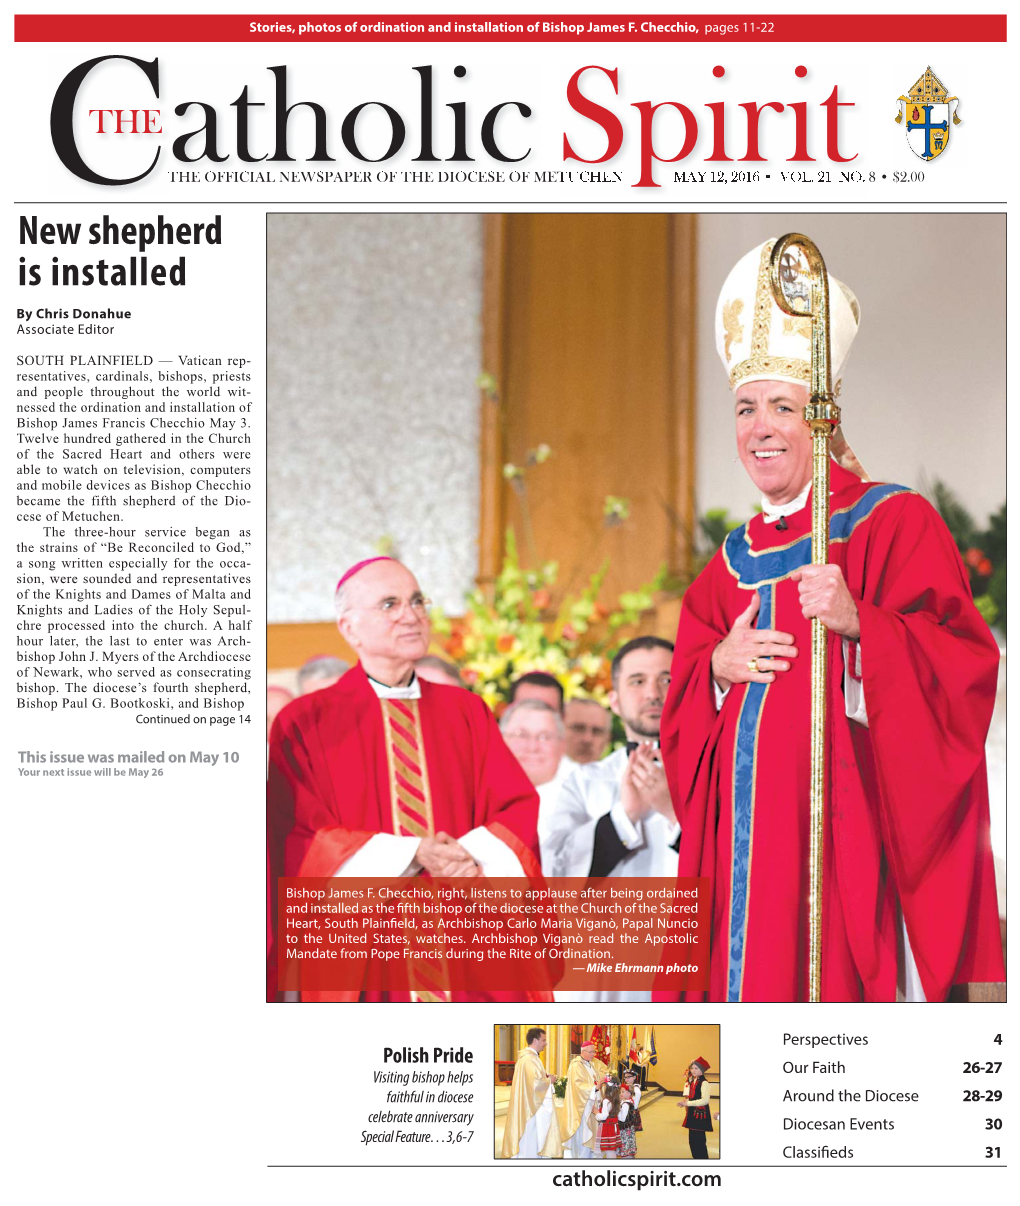 The Catholic Spirit's Special Issue